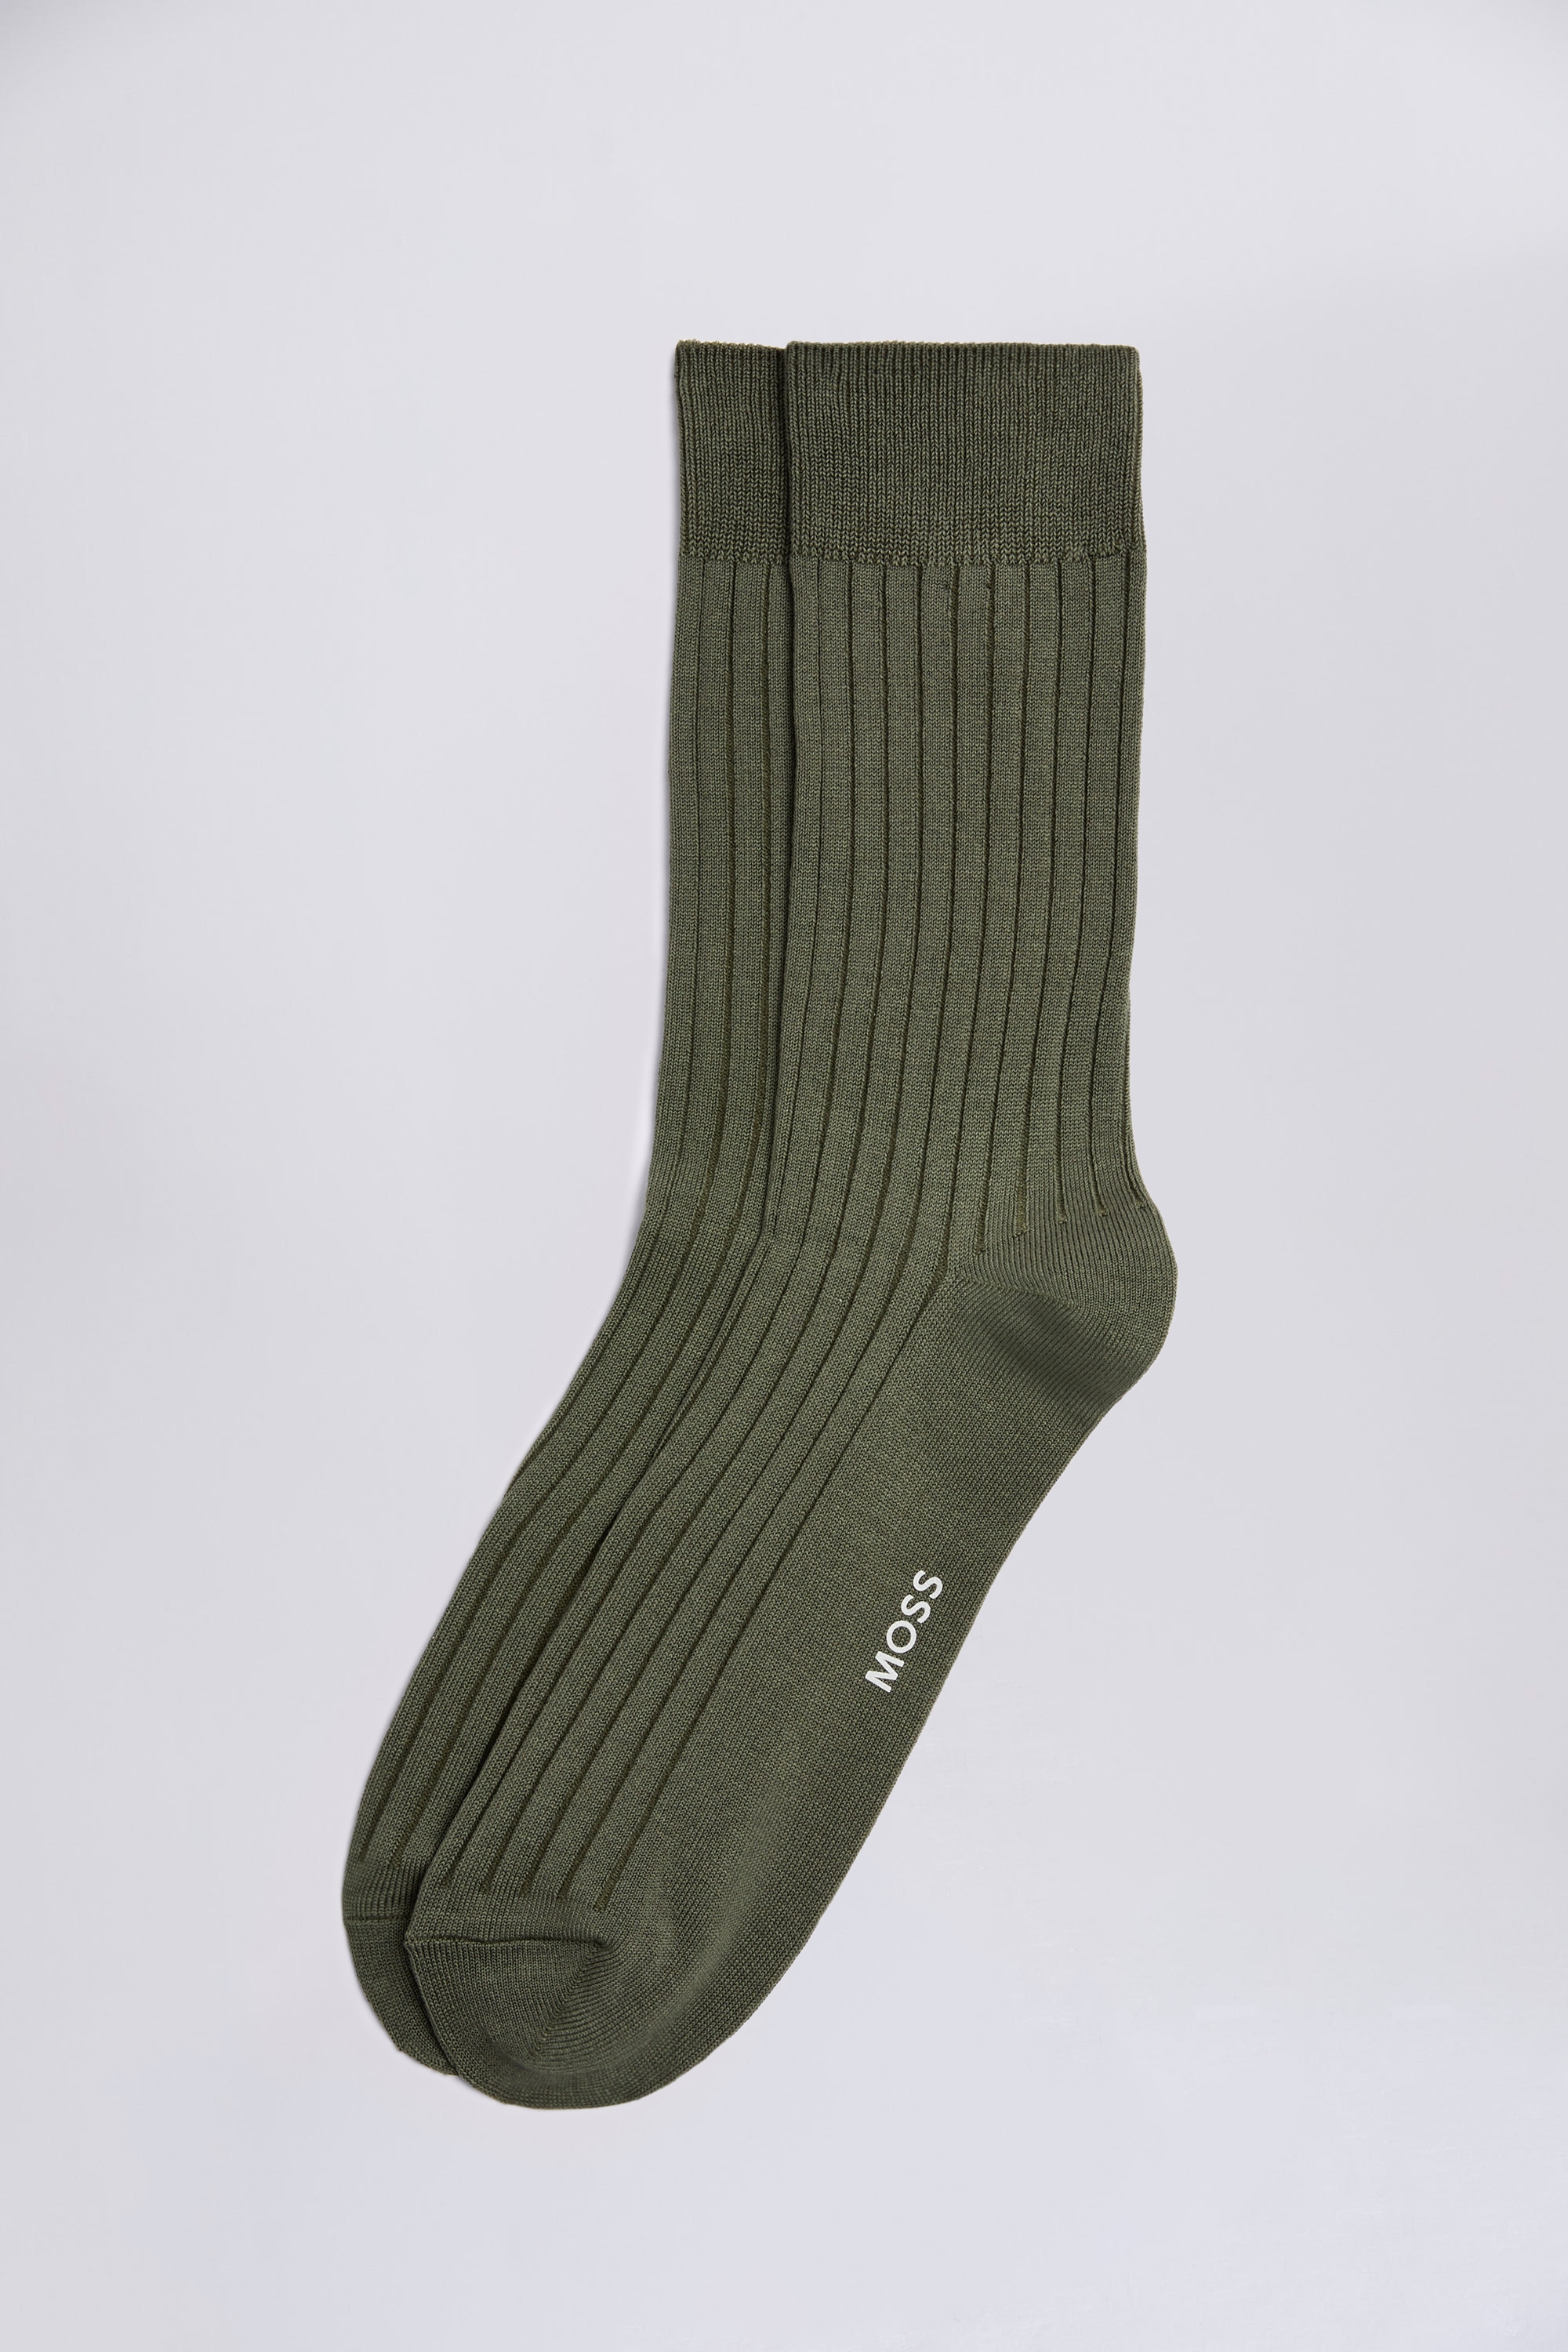 Olive Ribbed Socks | Buy Online at Moss